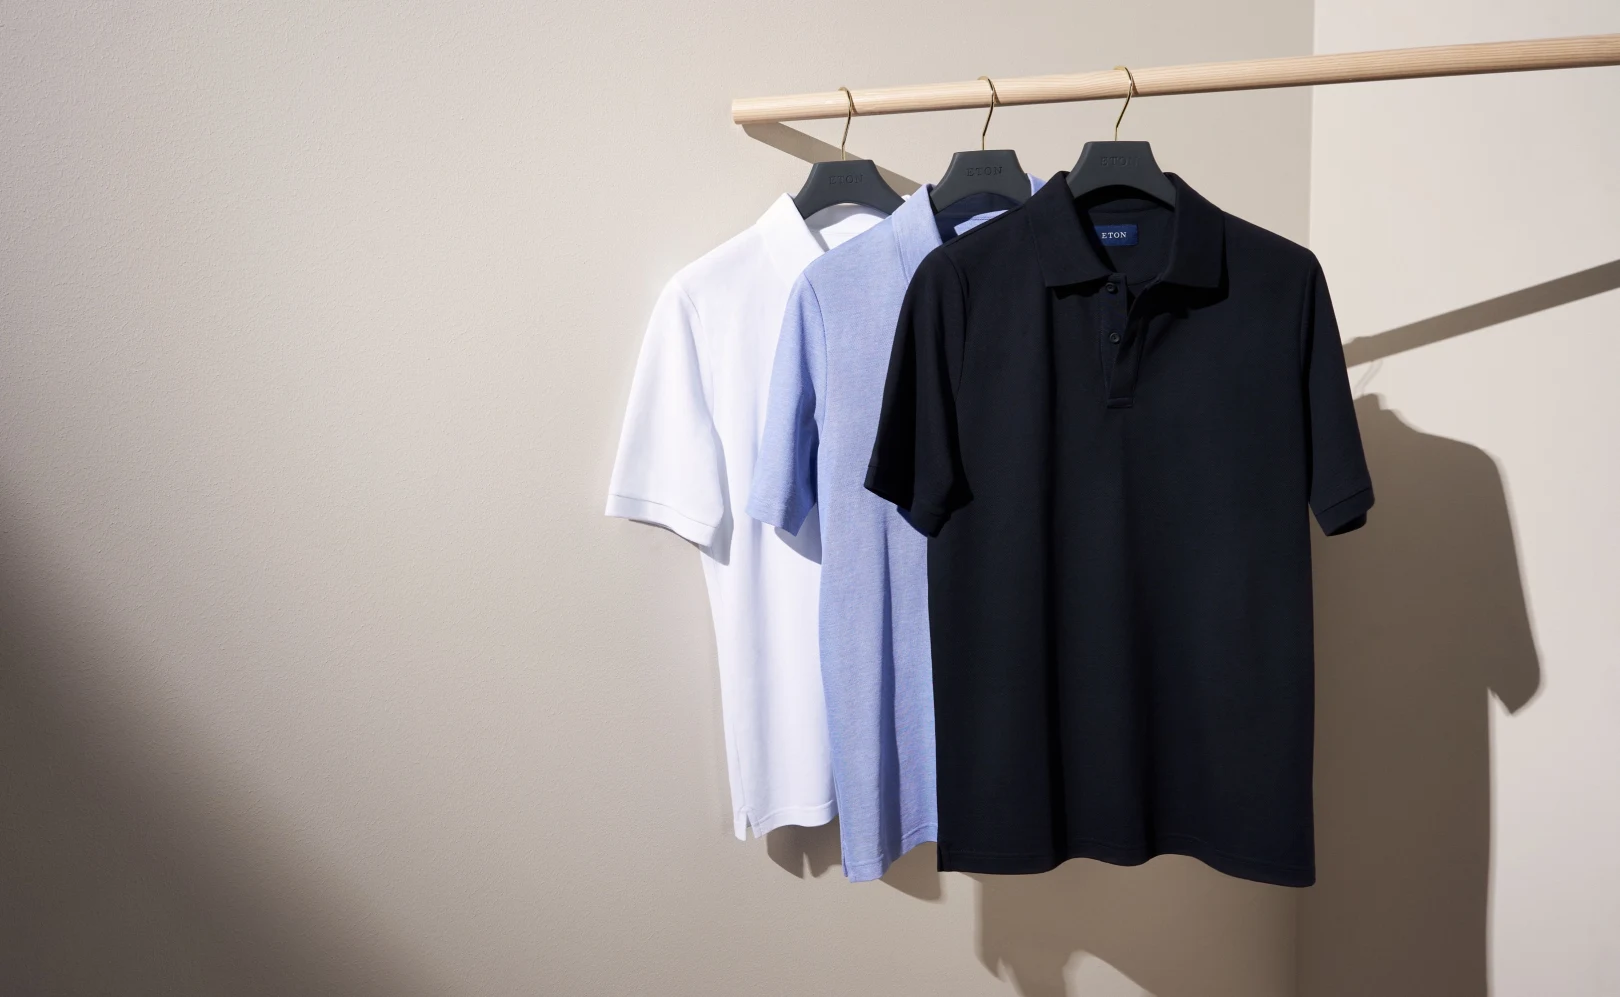 short sleeved shirts on rack hanging